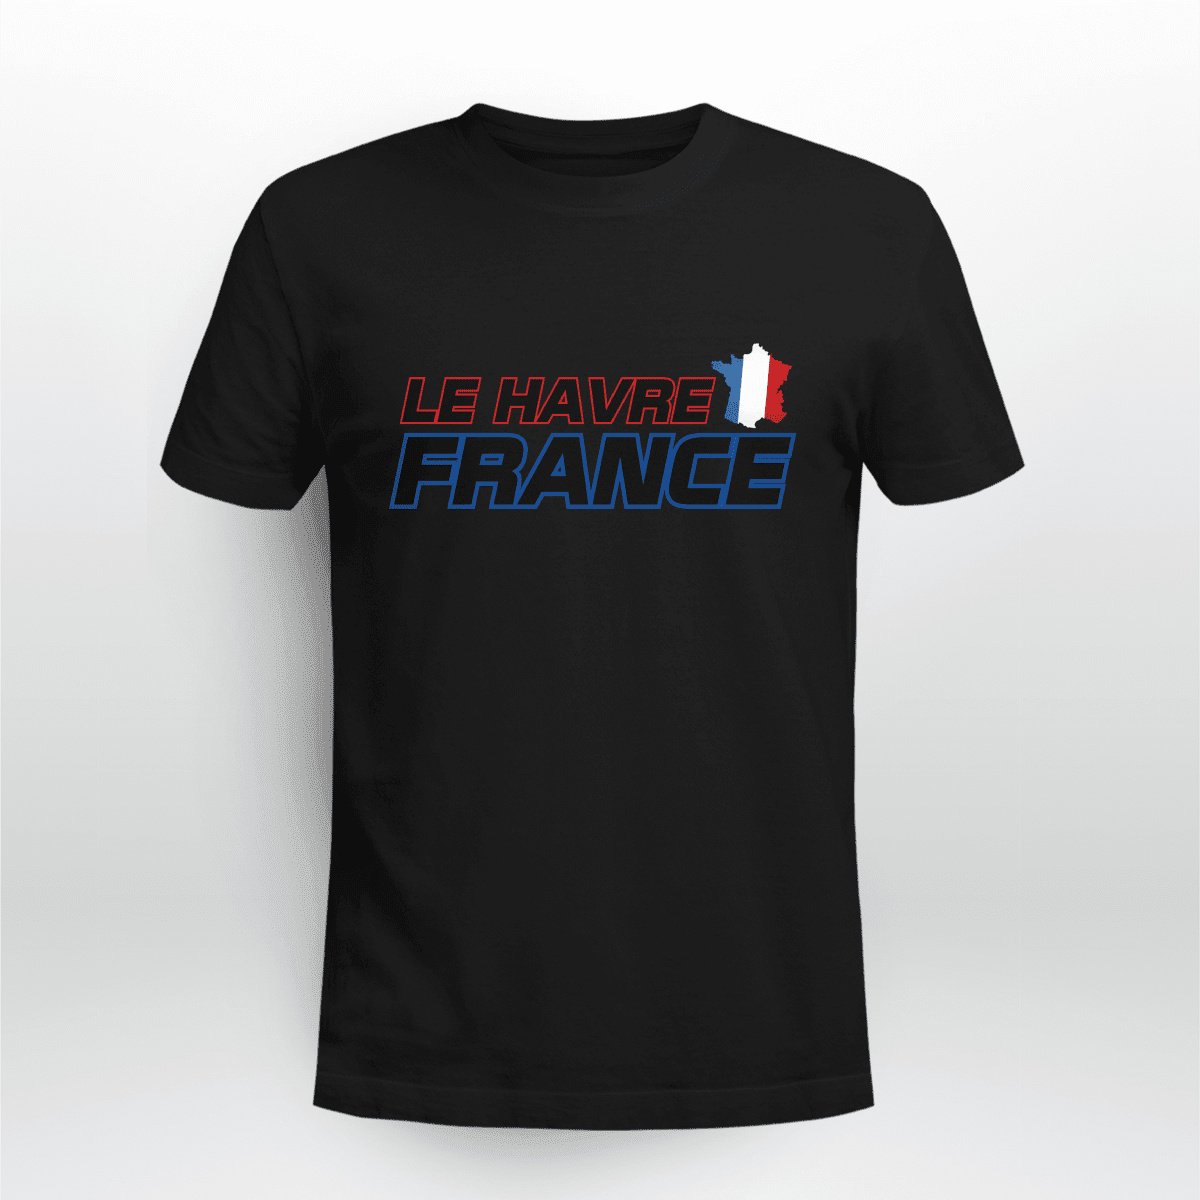 Le Havre France Shirt